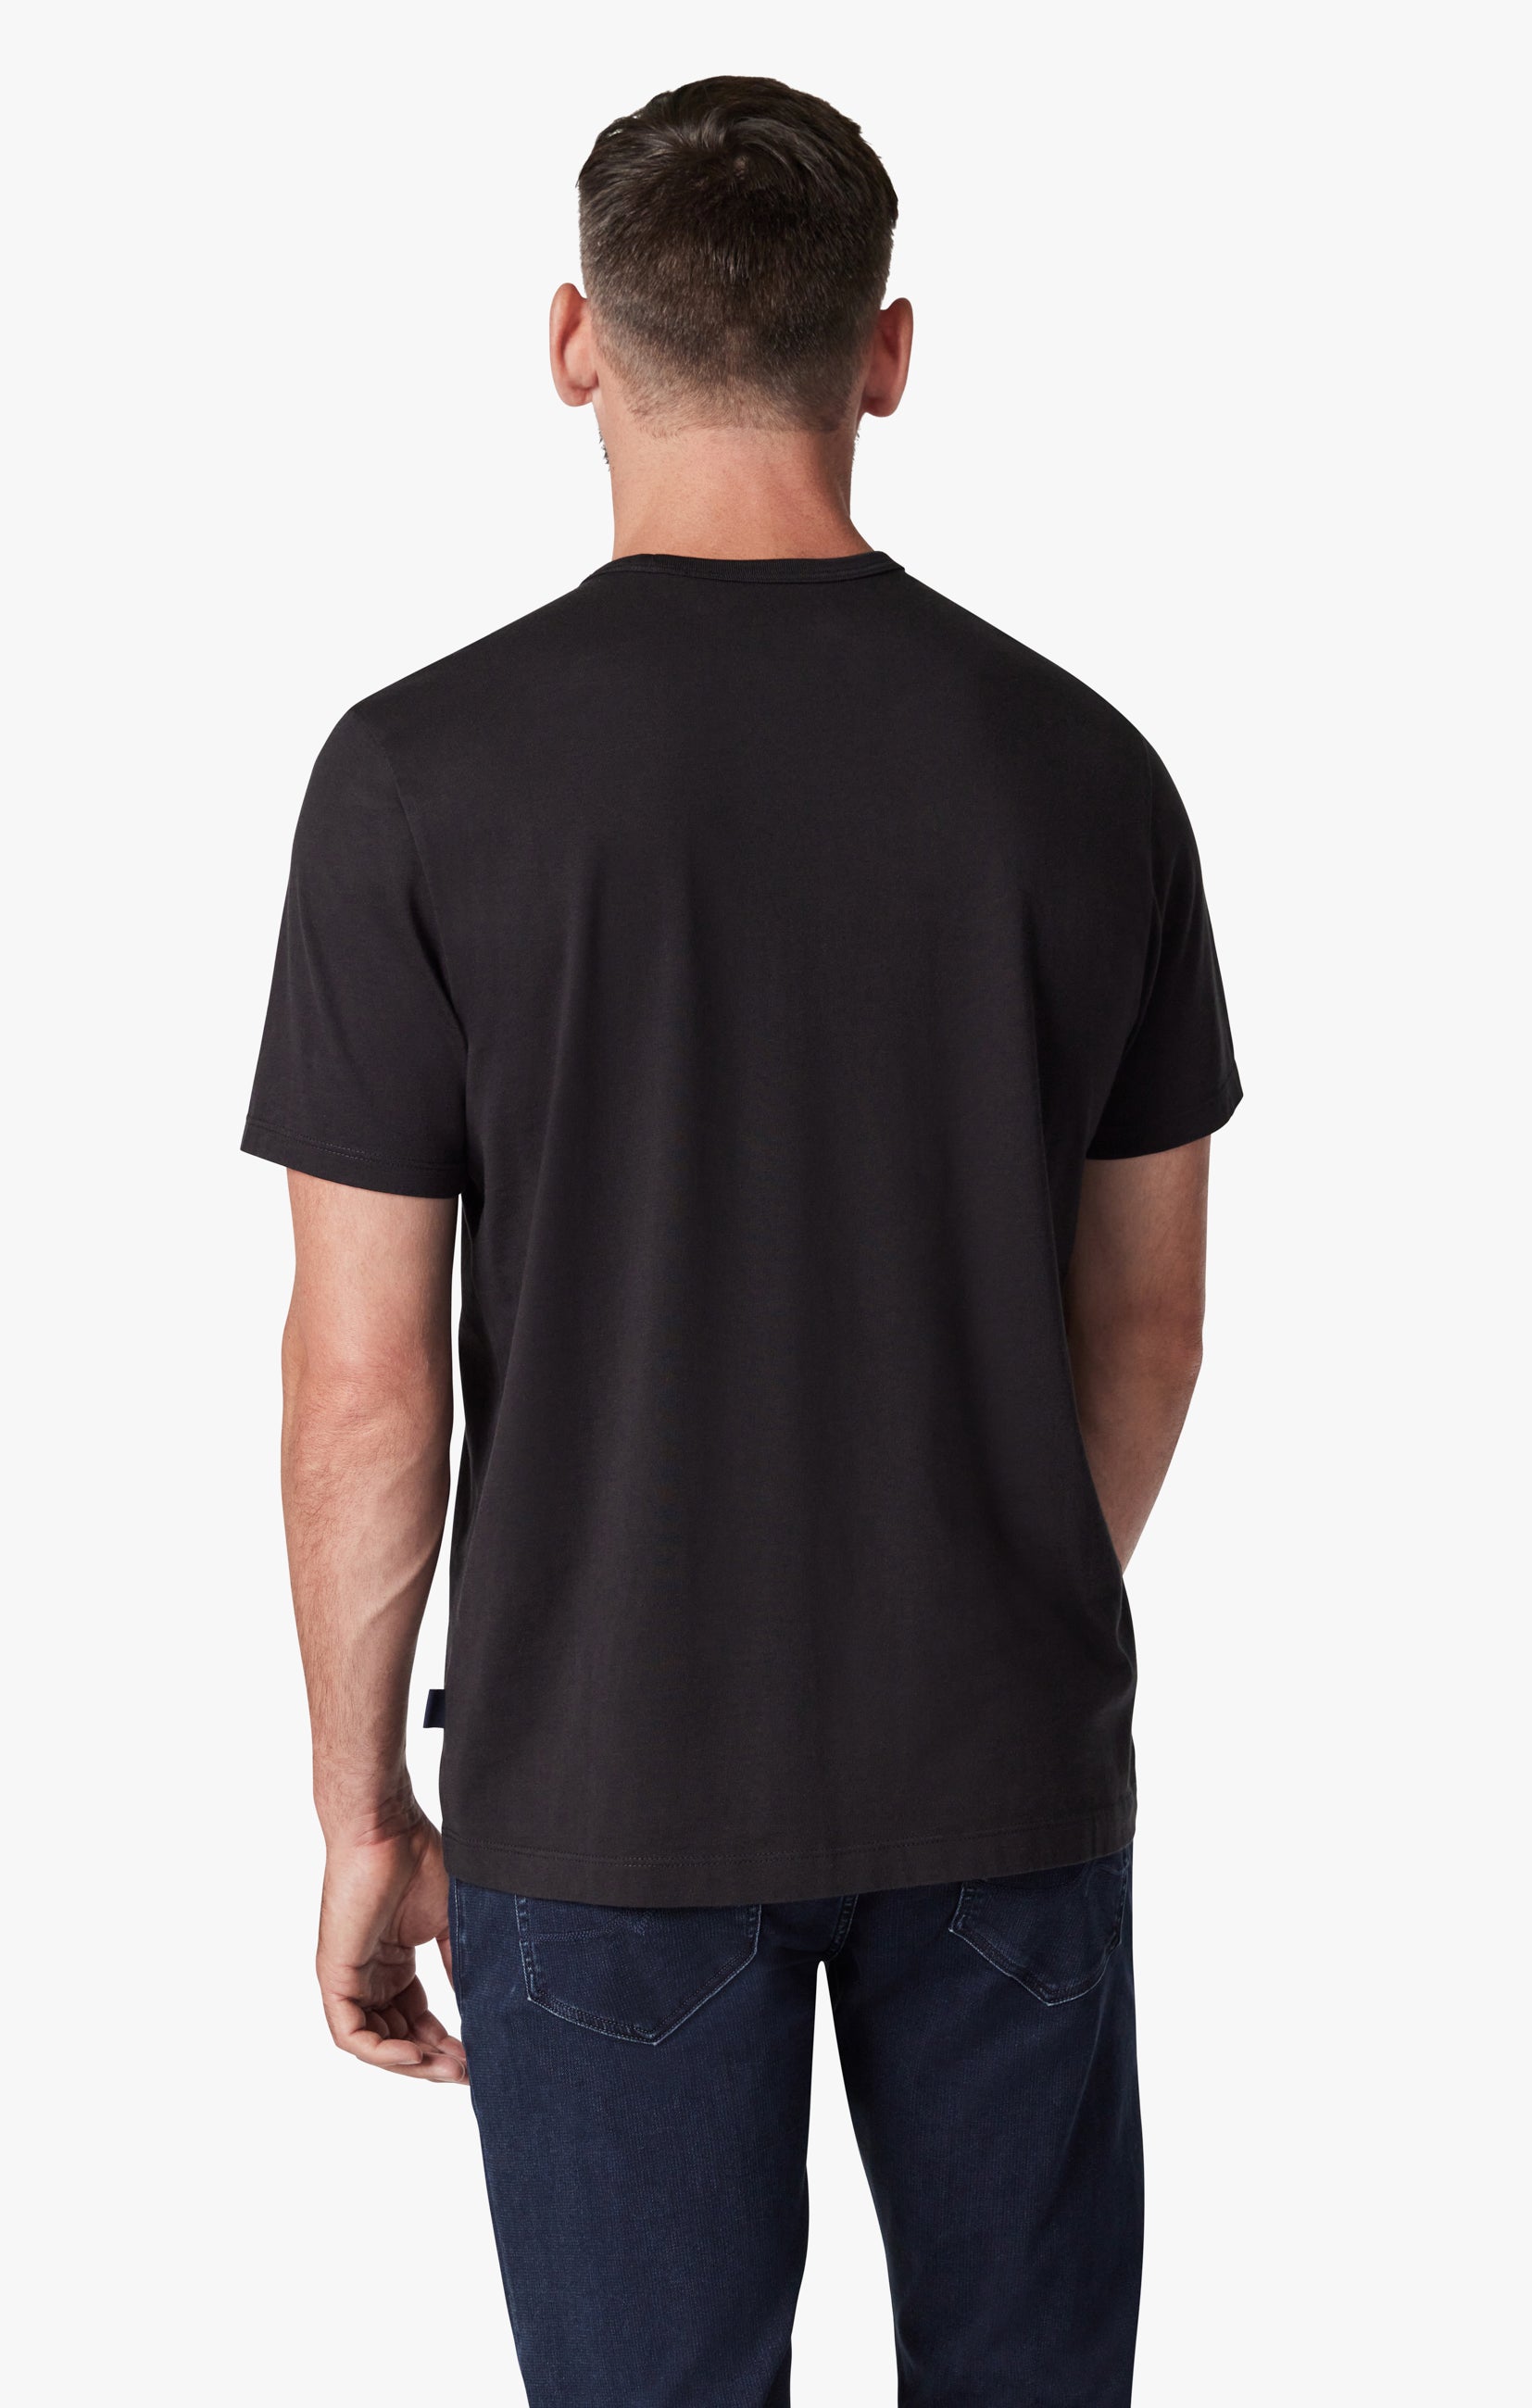 Basic Crew Neck T-Shirt in Black Image 3